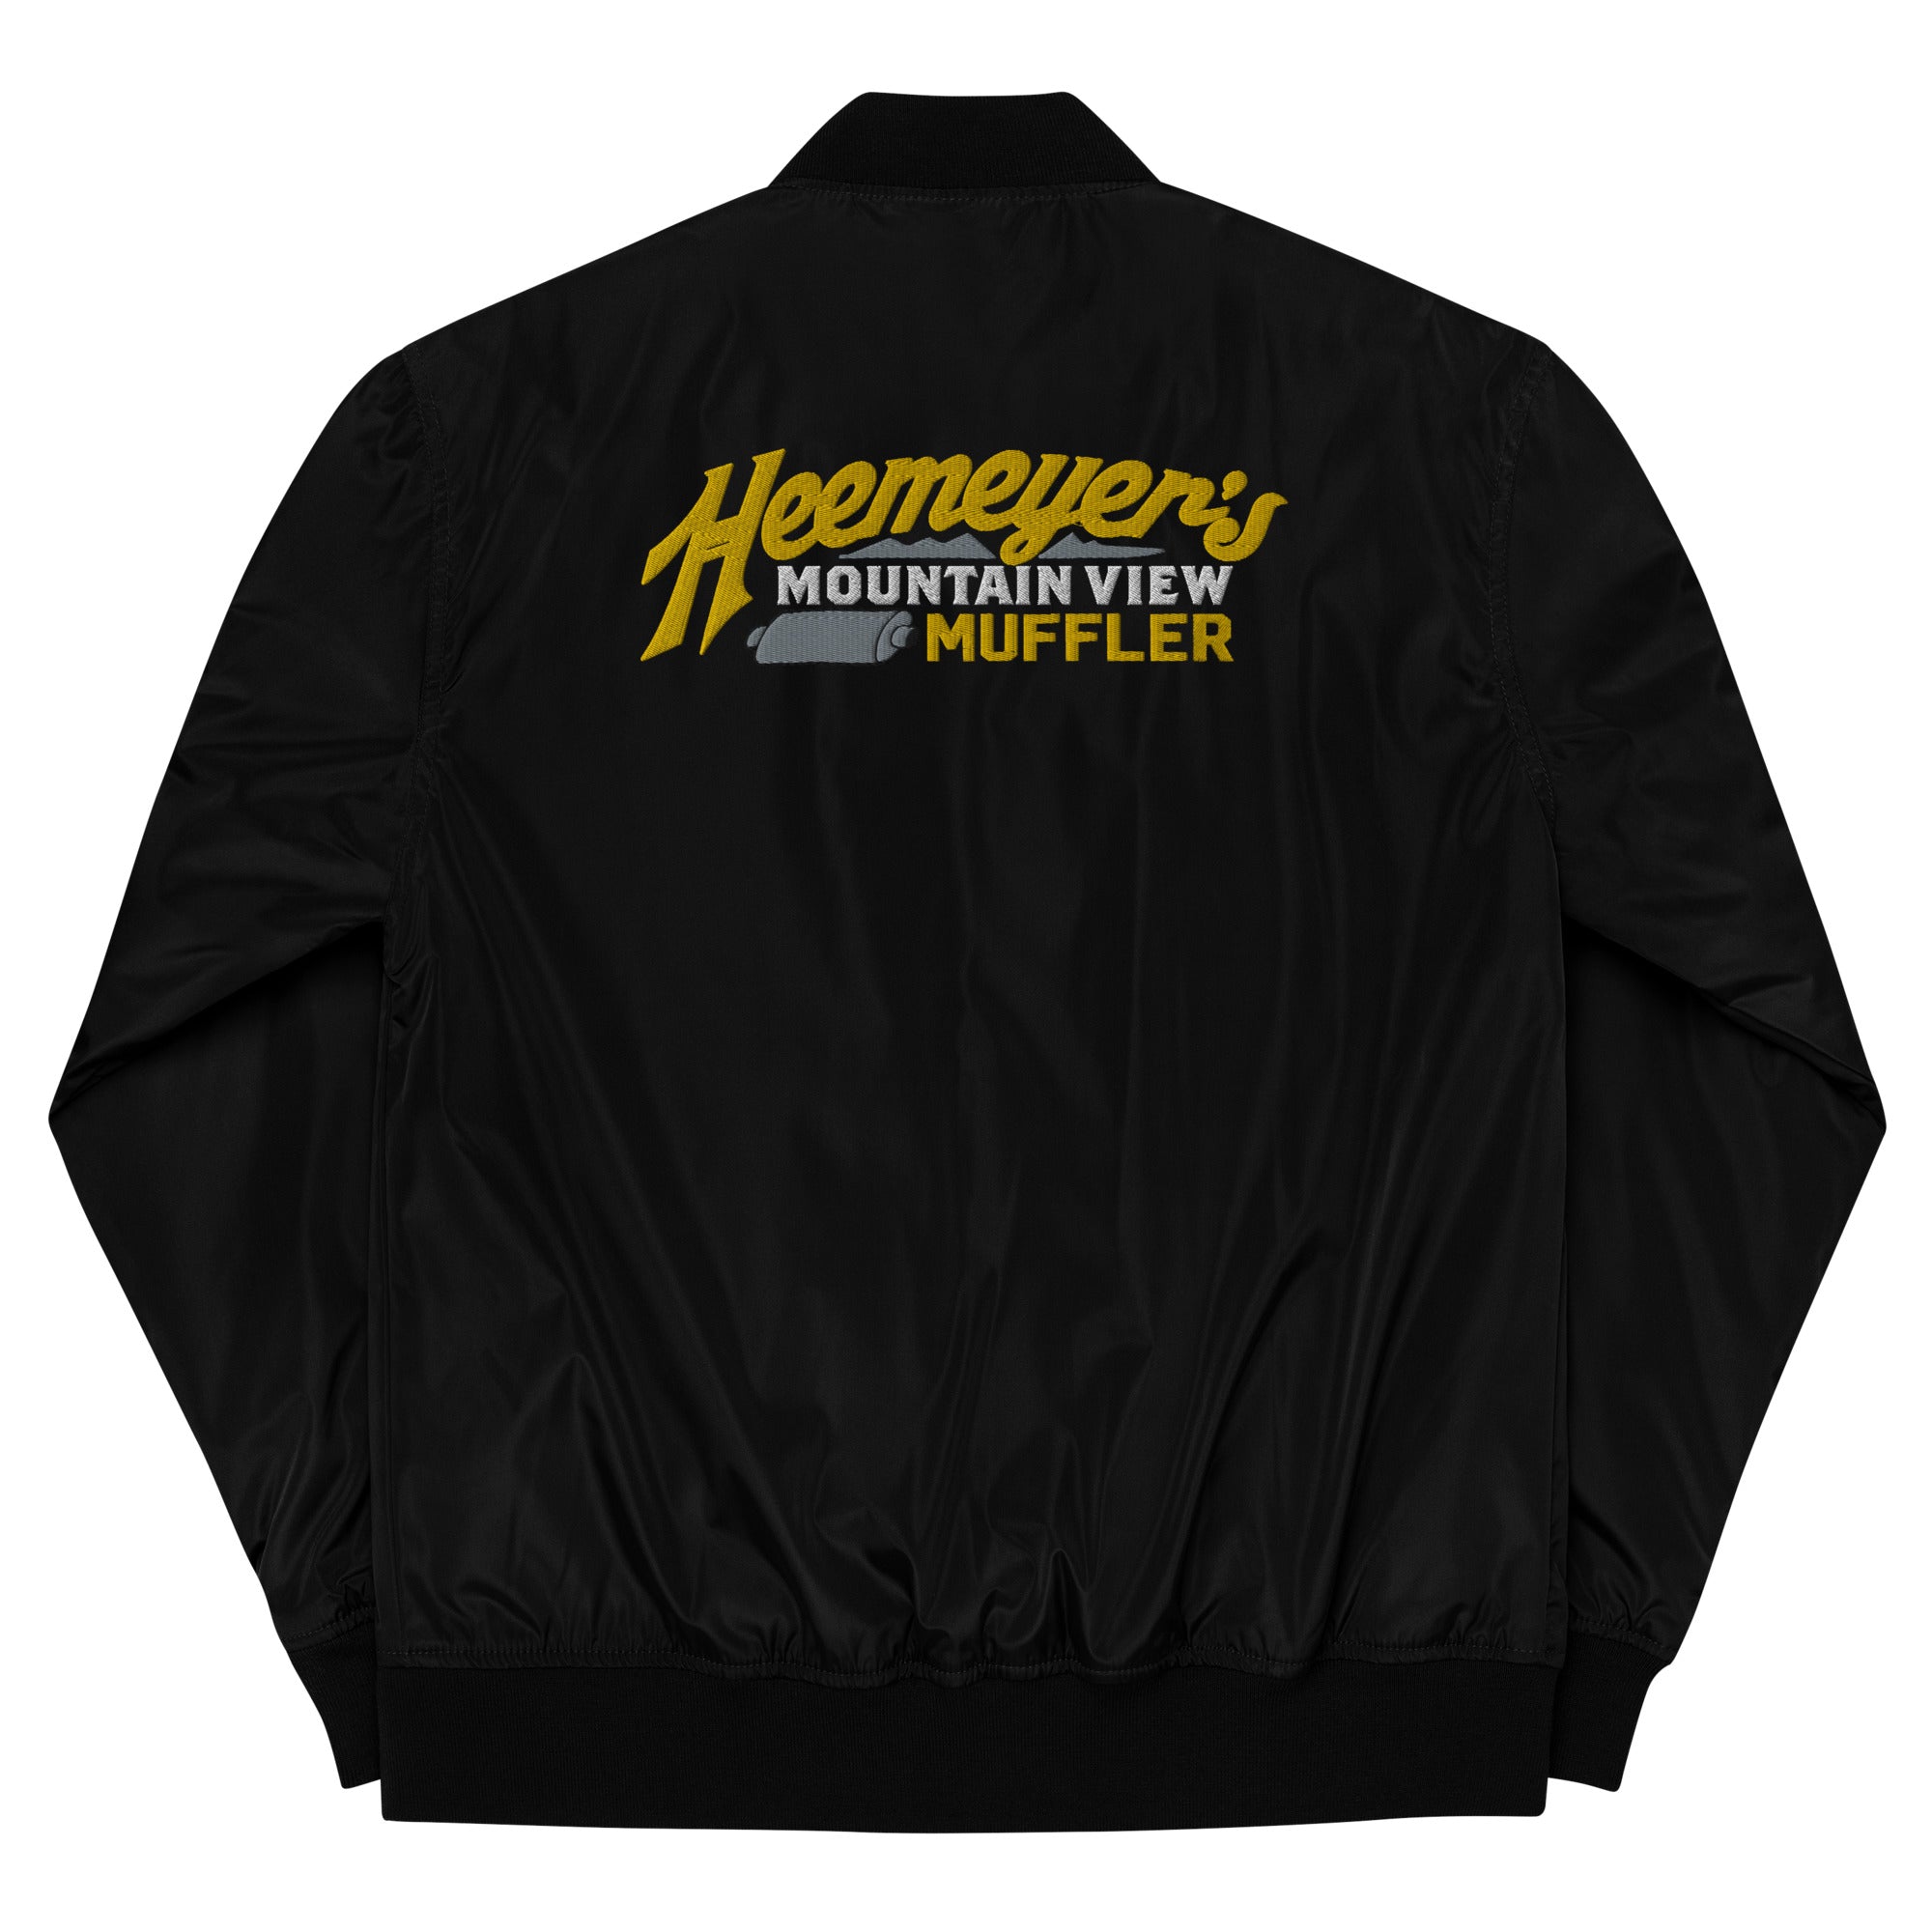 Heemeyer's Mountain View Muffler Bomber Jacket